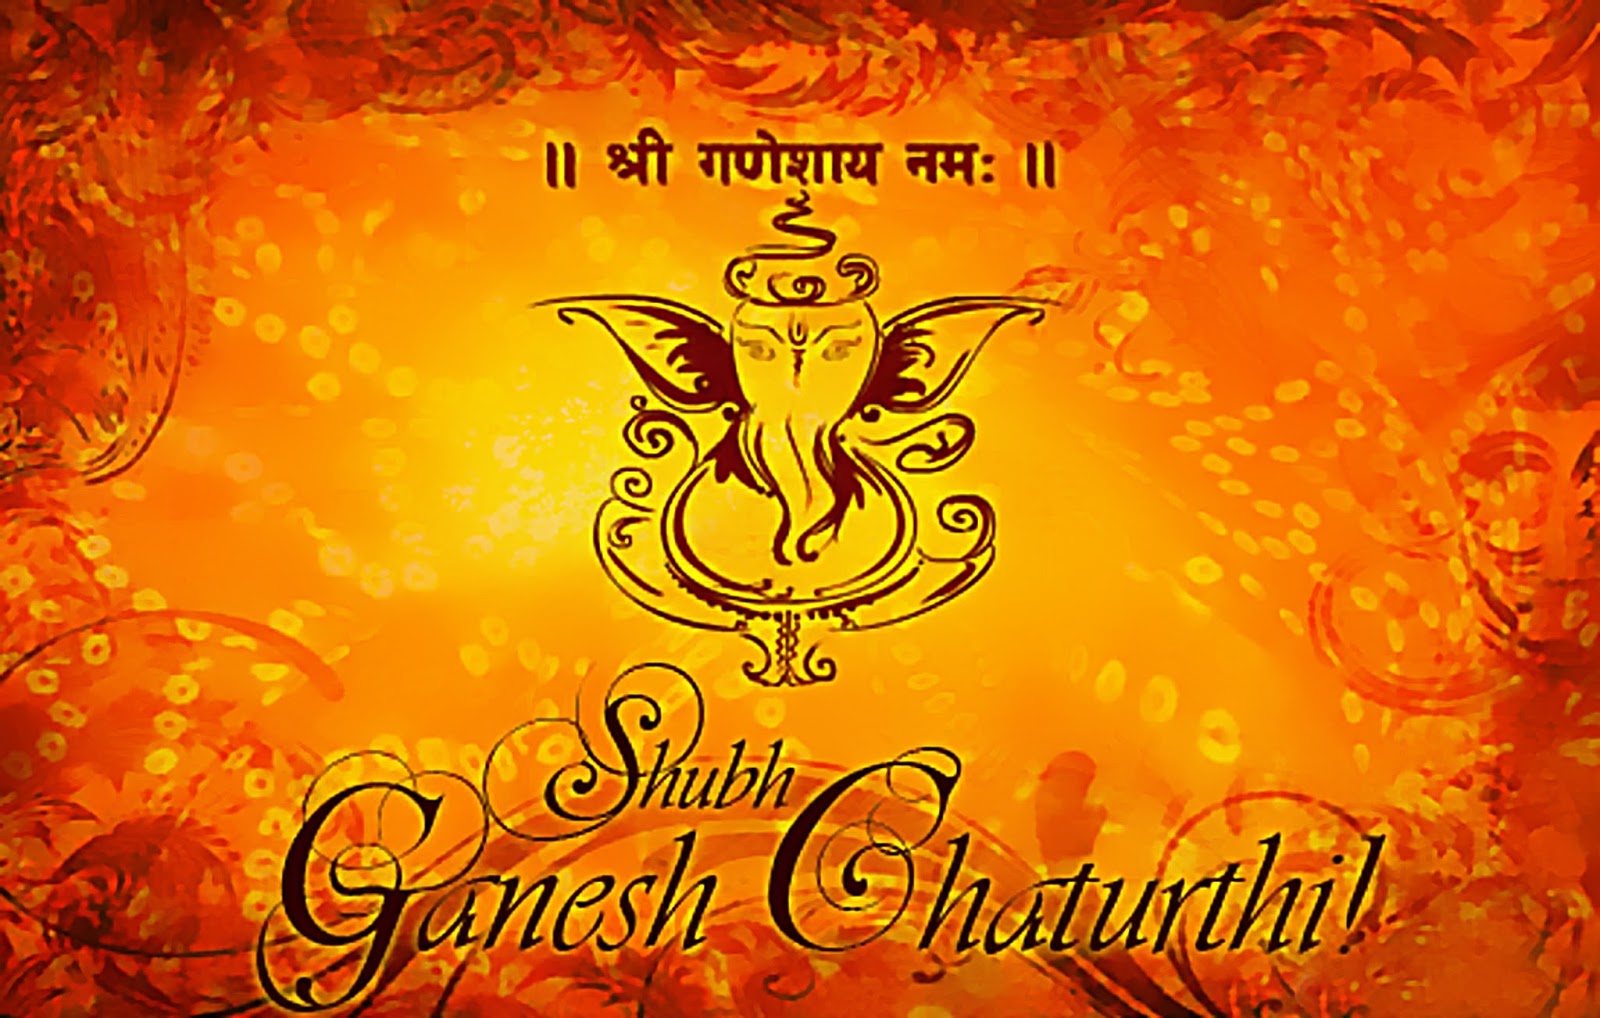 Happy Ganesh Chaturthi Whatsapp Status & Messages